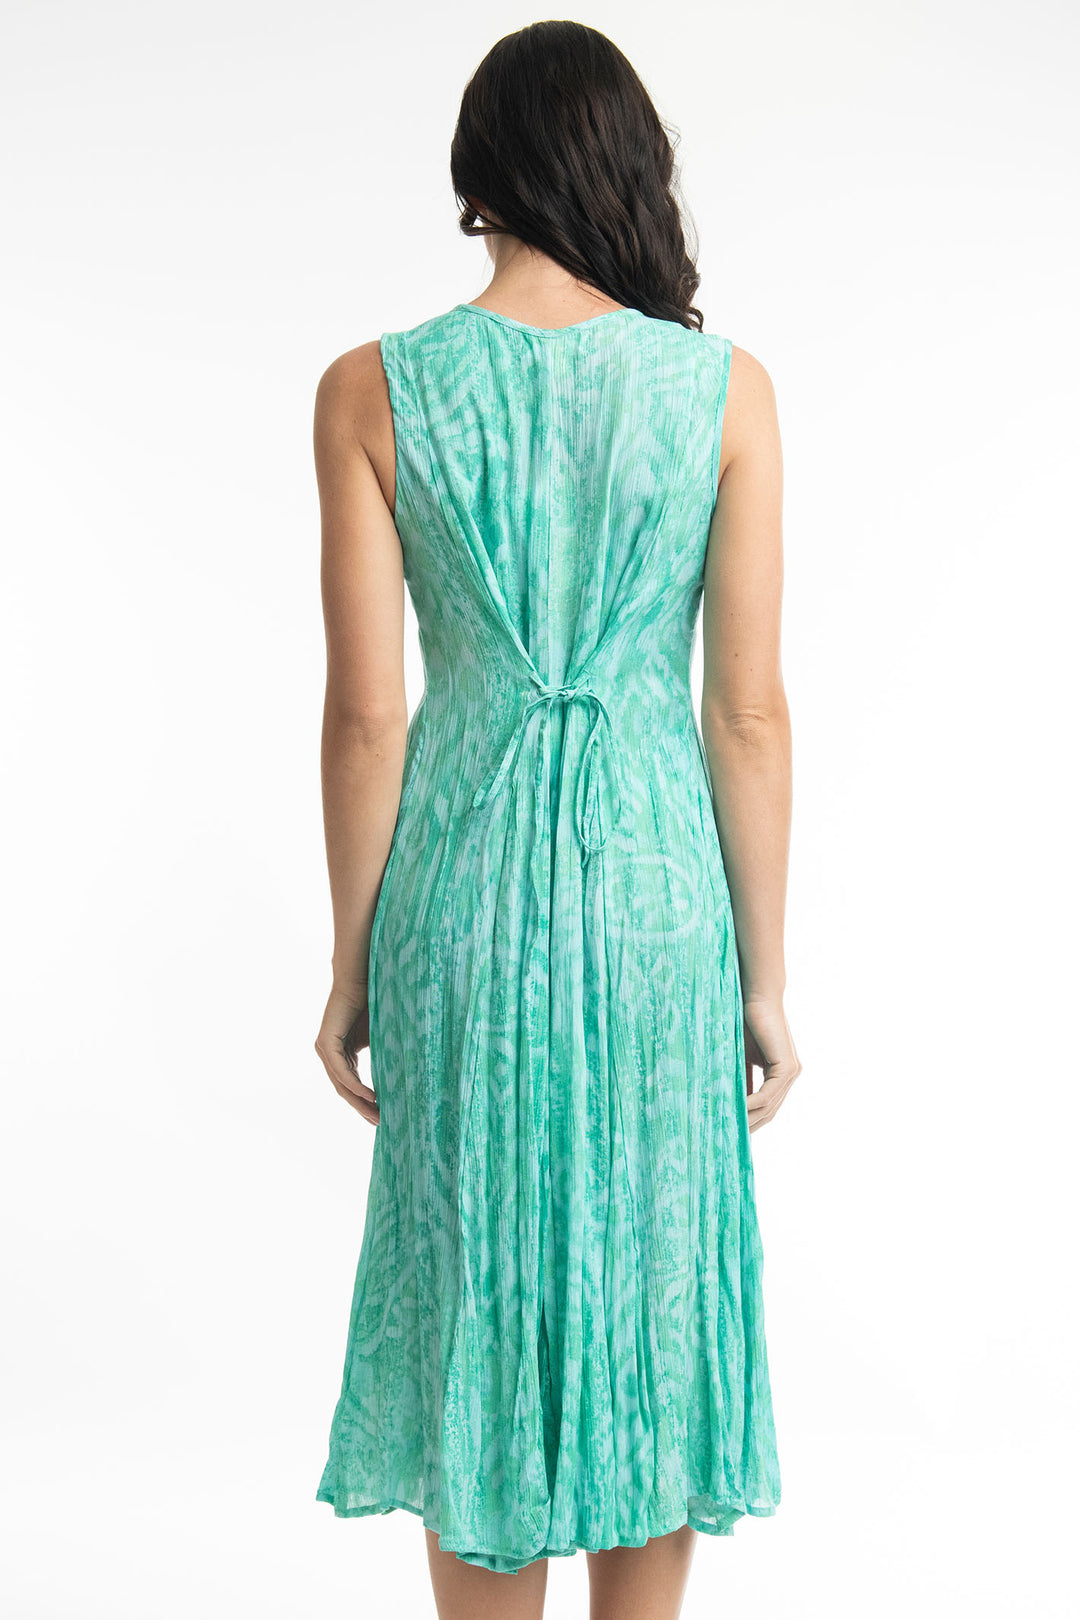 Orientique Olympus 4189 Blue Print Tie Back Sleeveless Dress - Dotique